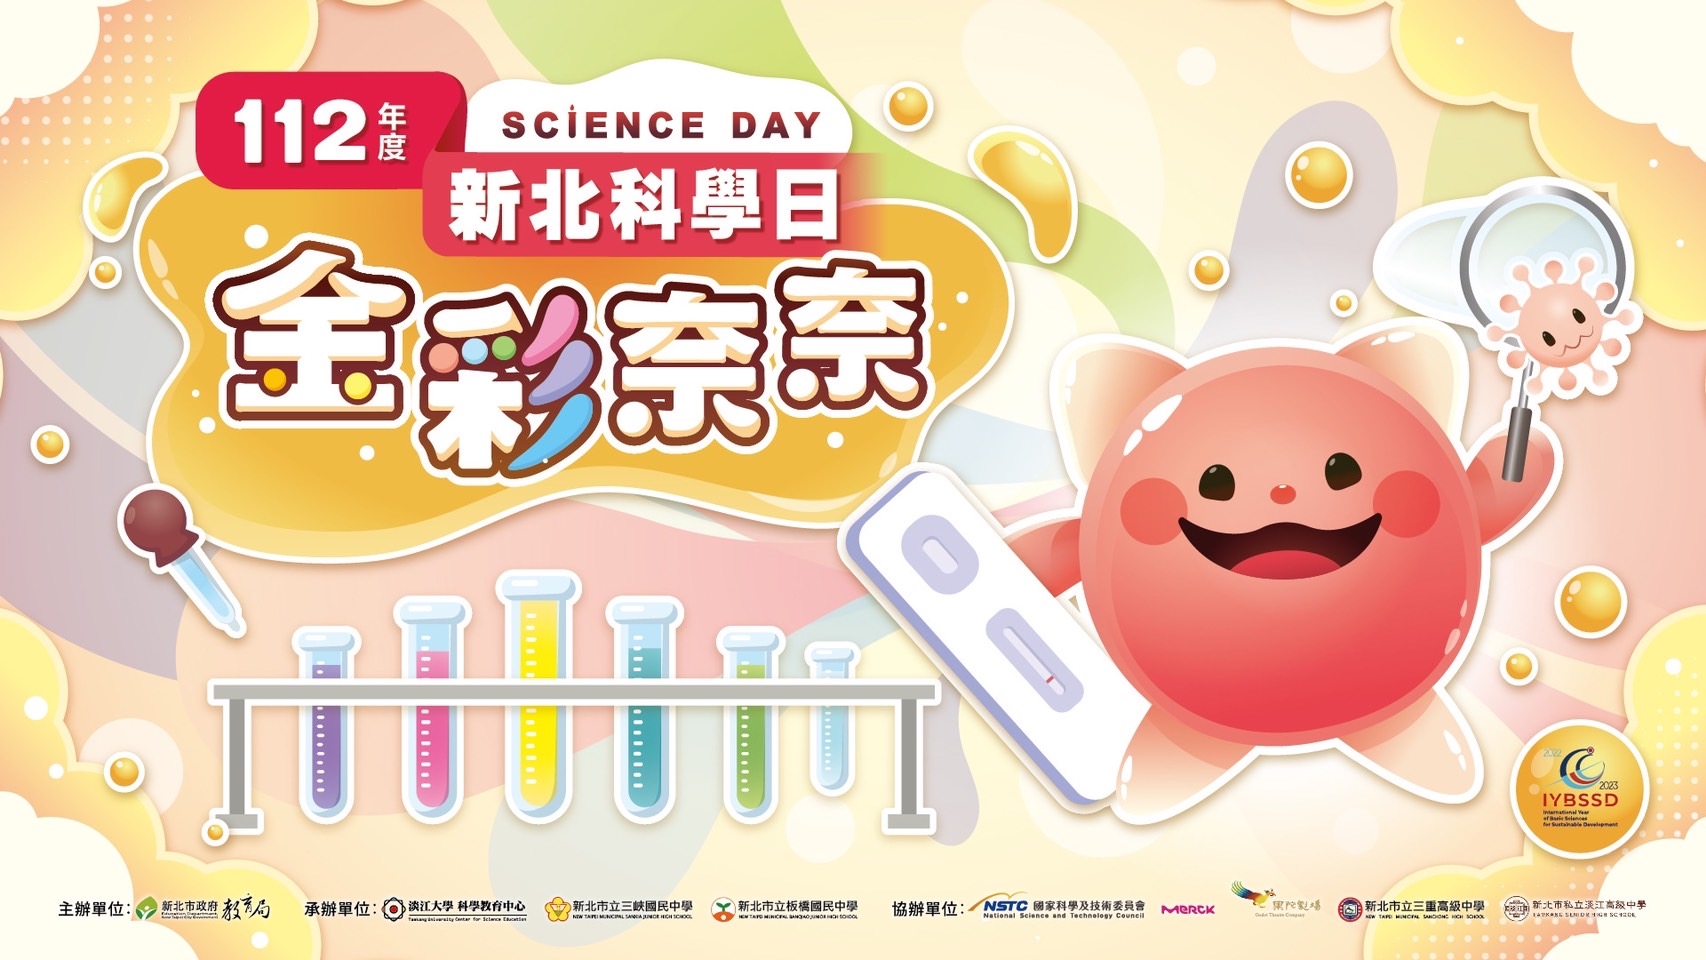 Theme of New Taipei City Science Festival